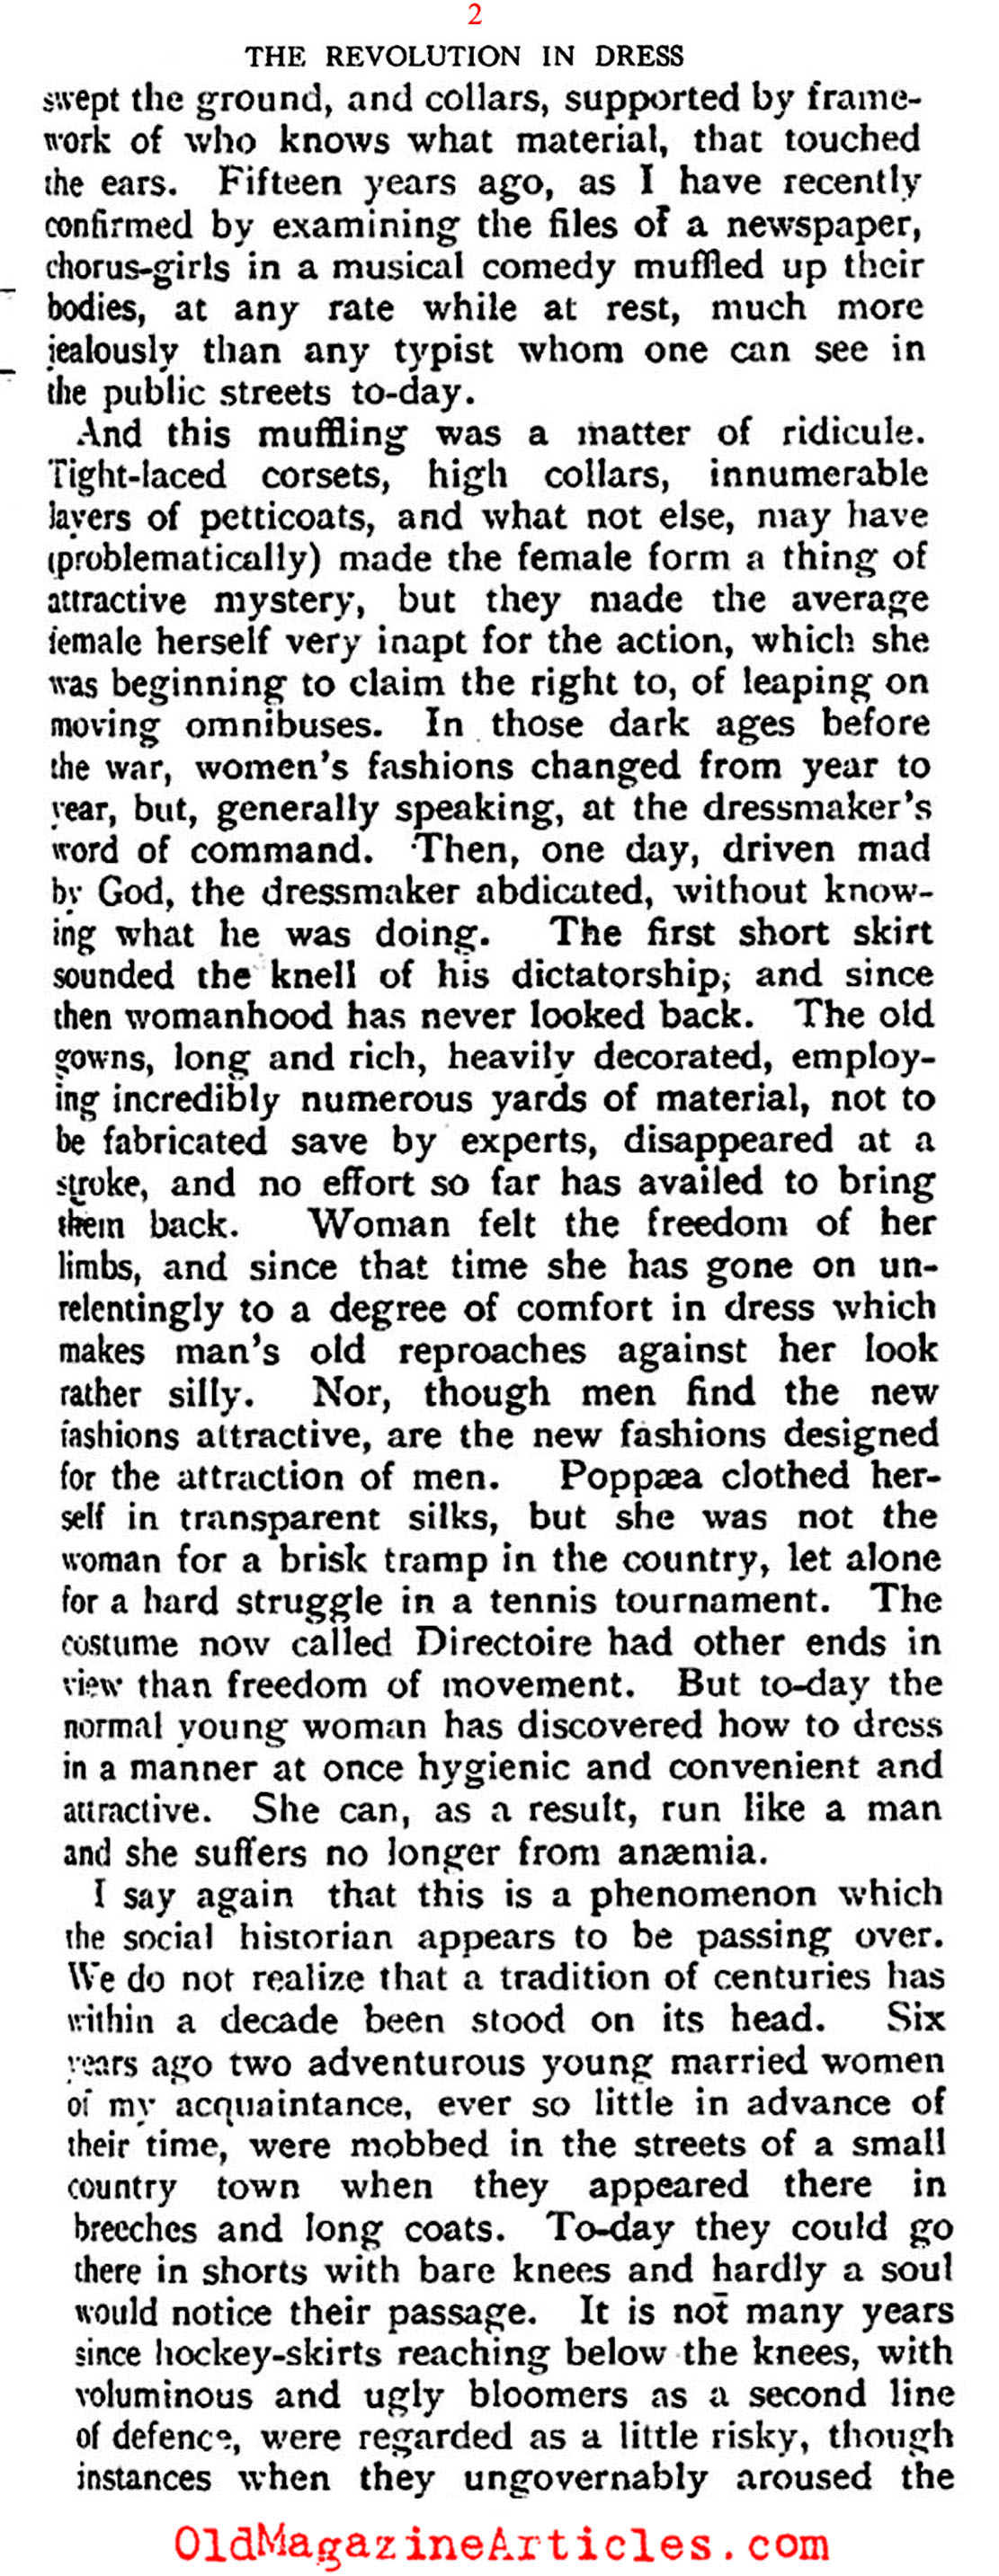 The Revolution in 1920s Fashion (Saturday Review of Literature, 1925)